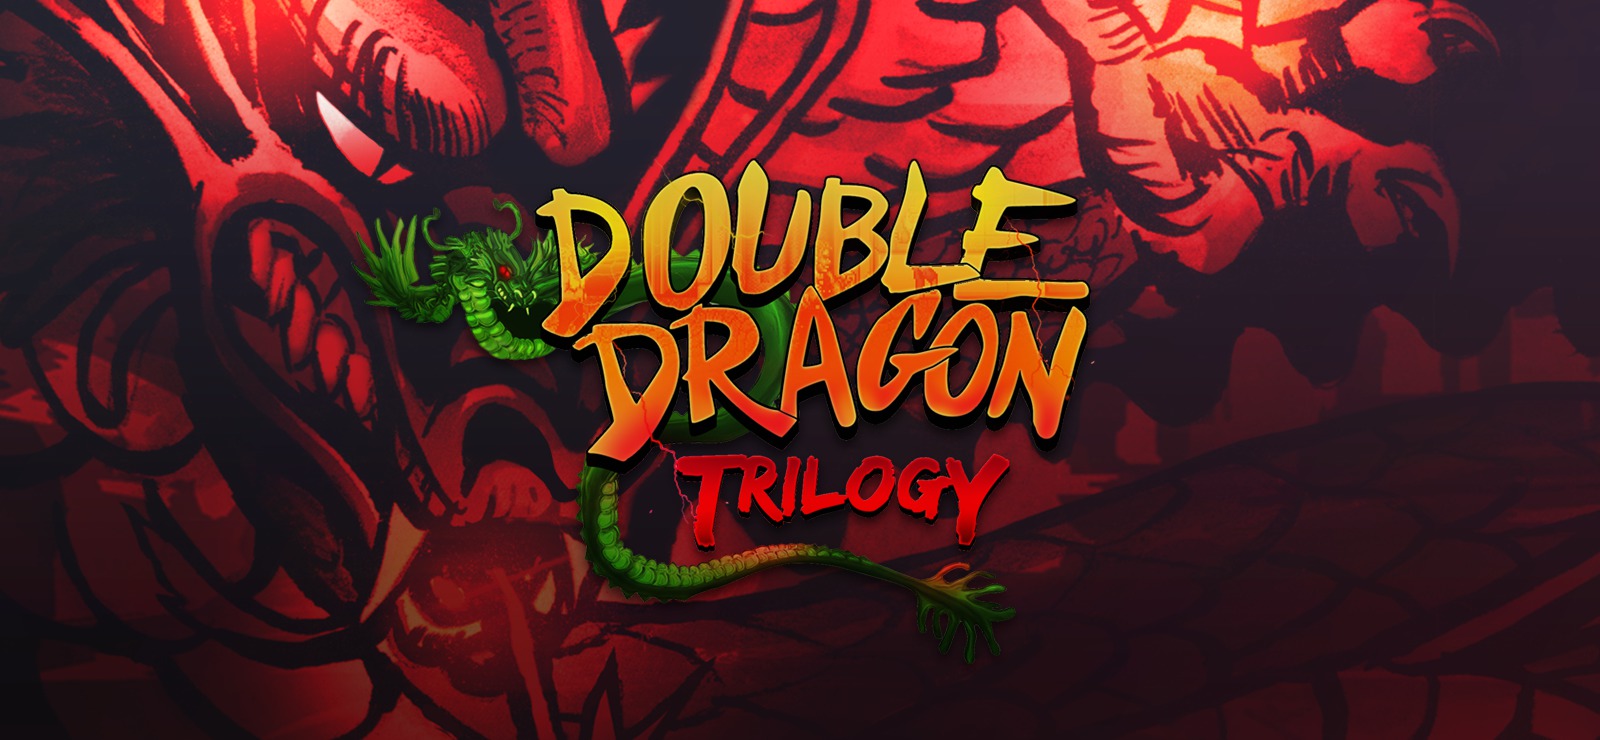 High Resolution Wallpaper | Double Dragon Trilogy 1600x740 px